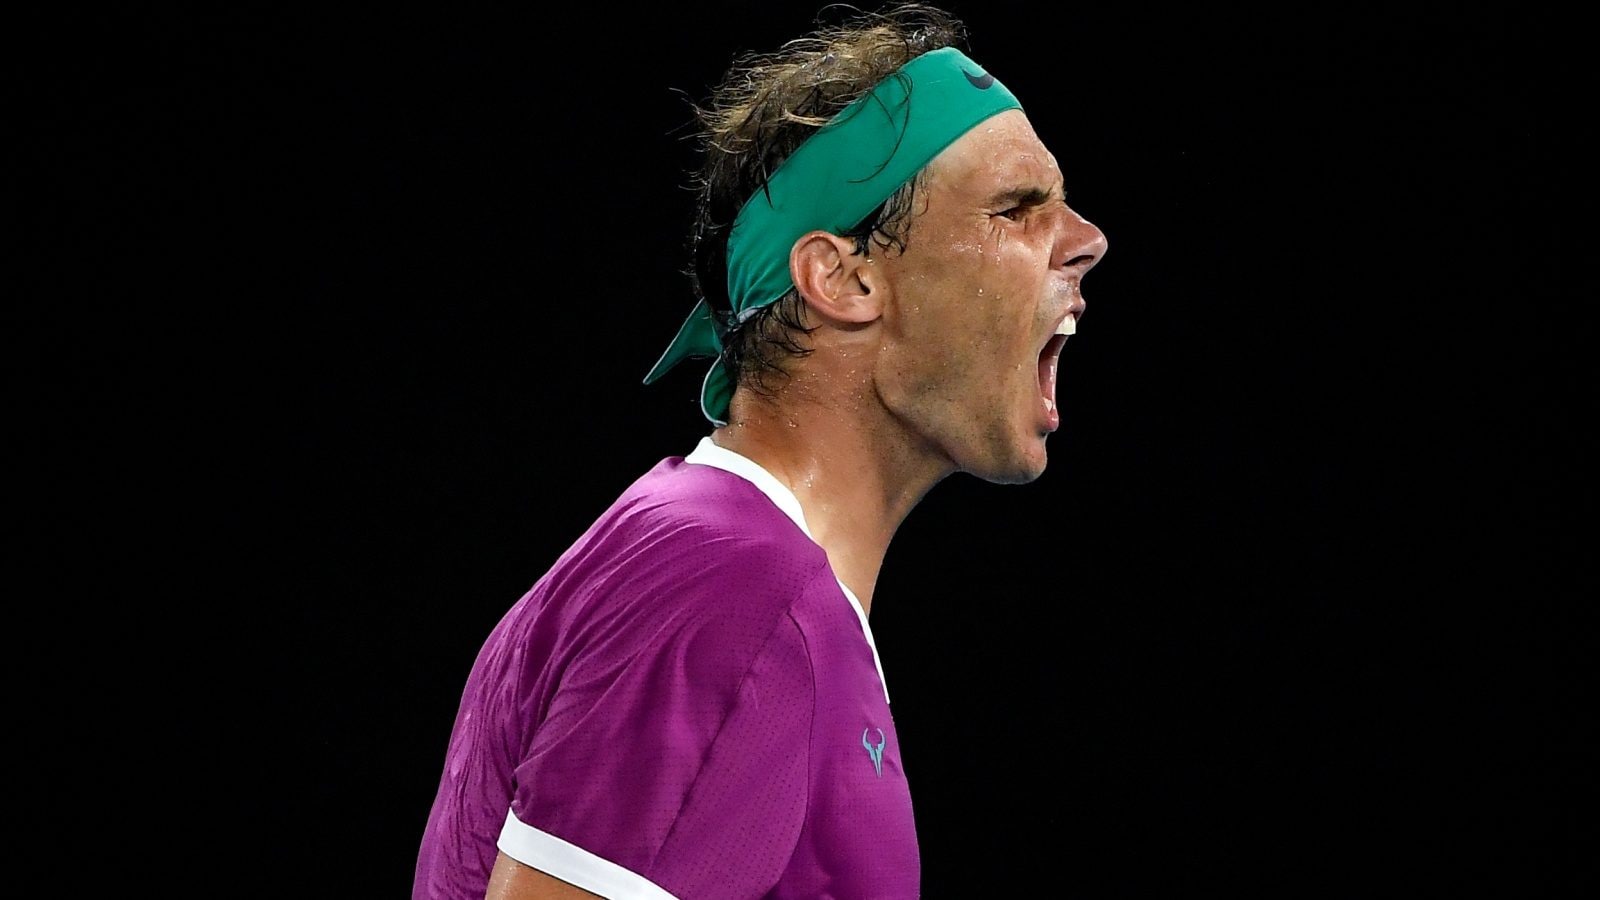 Australian Open 2022 Mens Singles Final Highlights Rafael Nadal Beats Daniil Medvedev 2-6, 6-7, 6-4, 6-4, 7-5 to Win His 21st Major